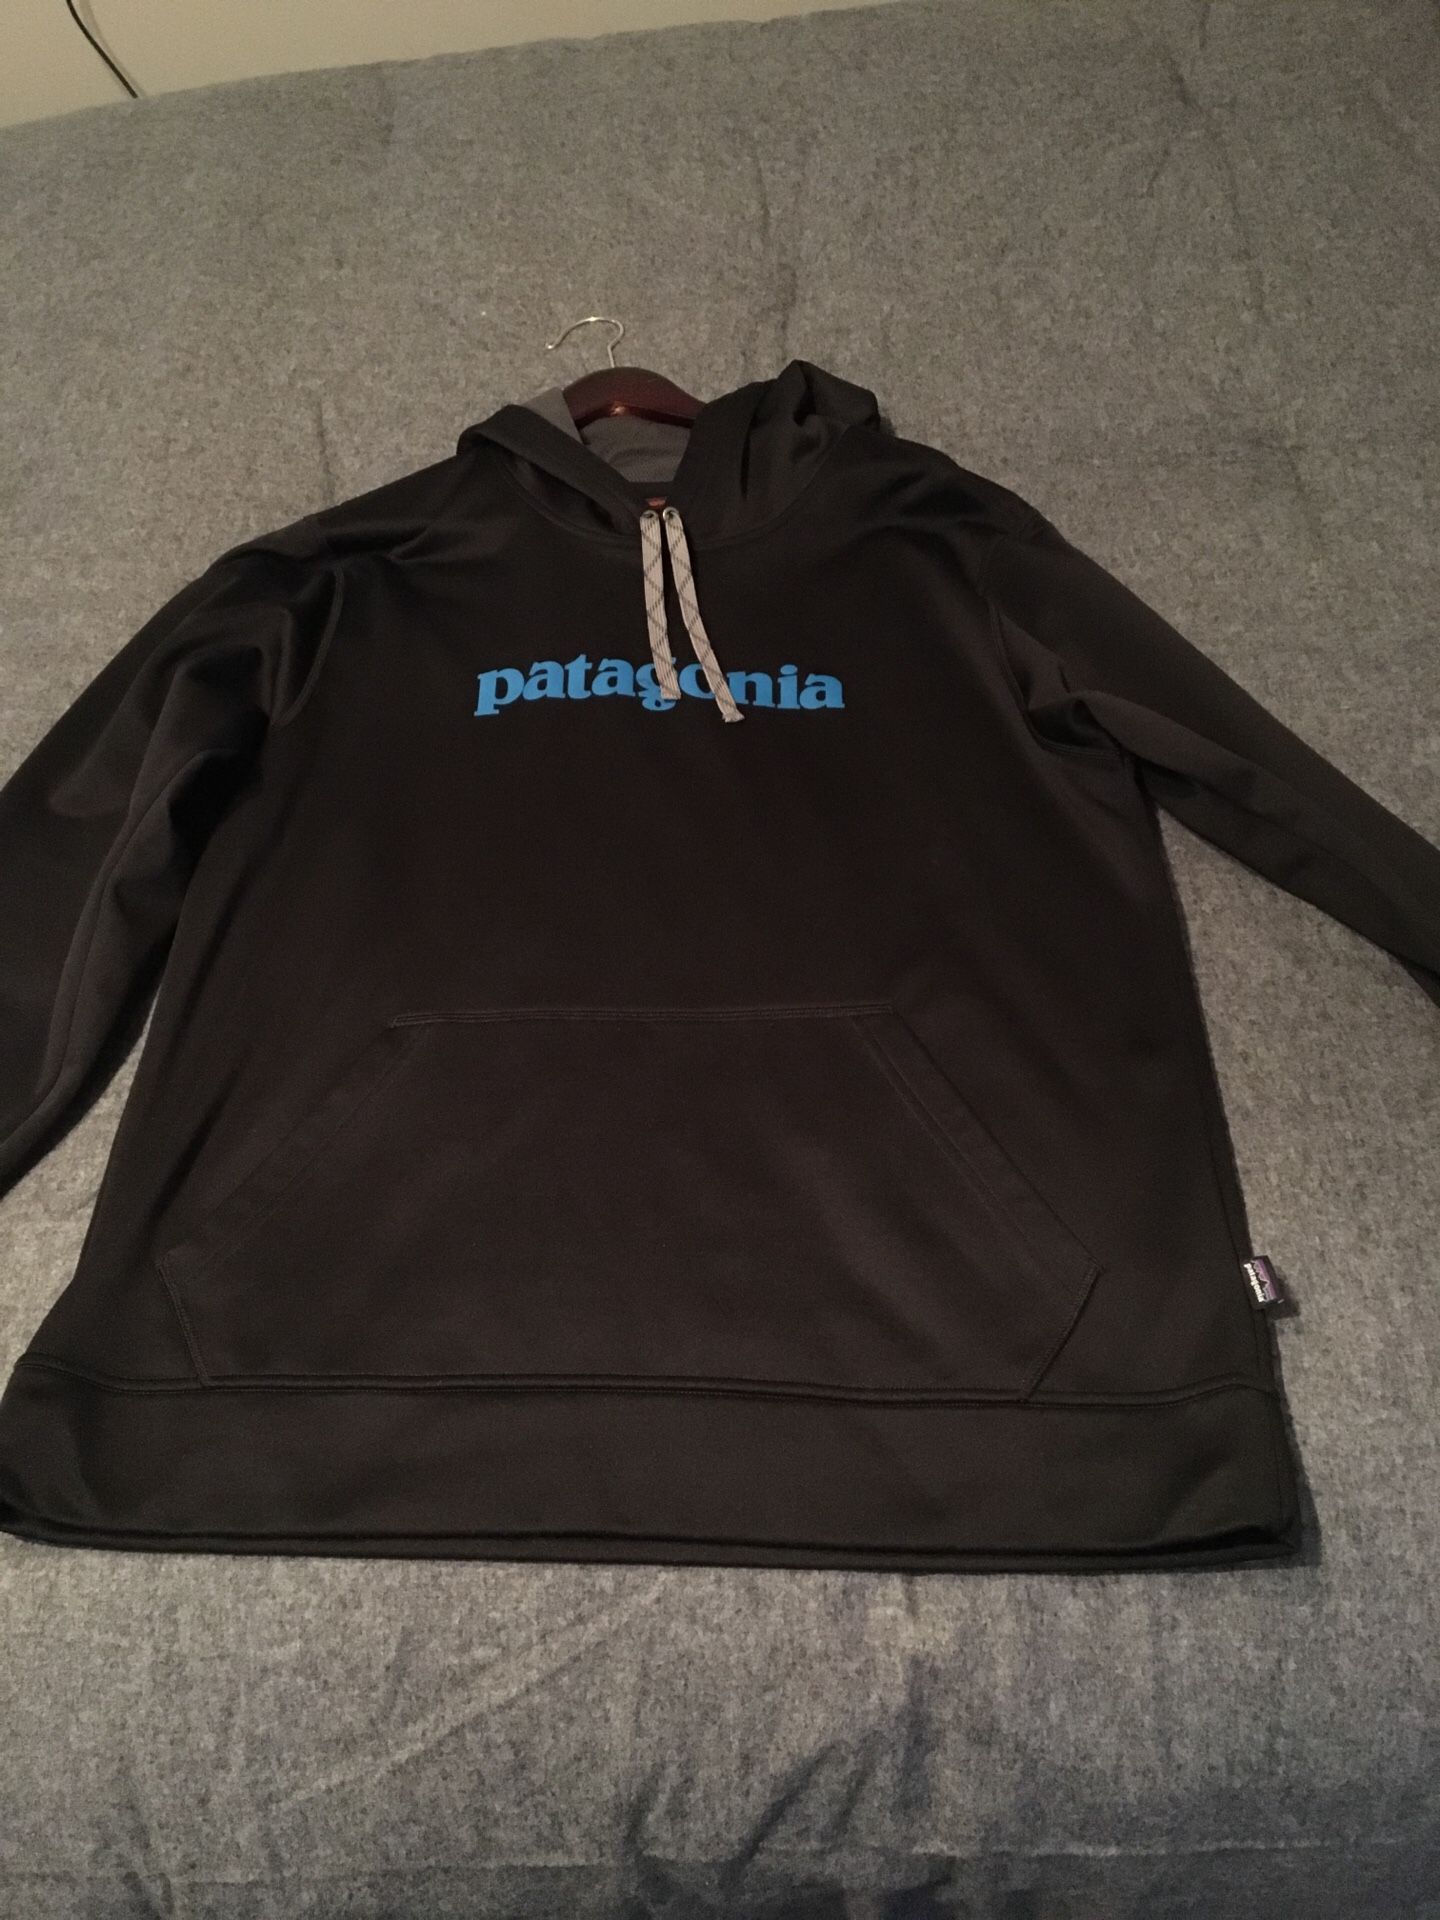 Patagonia hoodie men’s size L